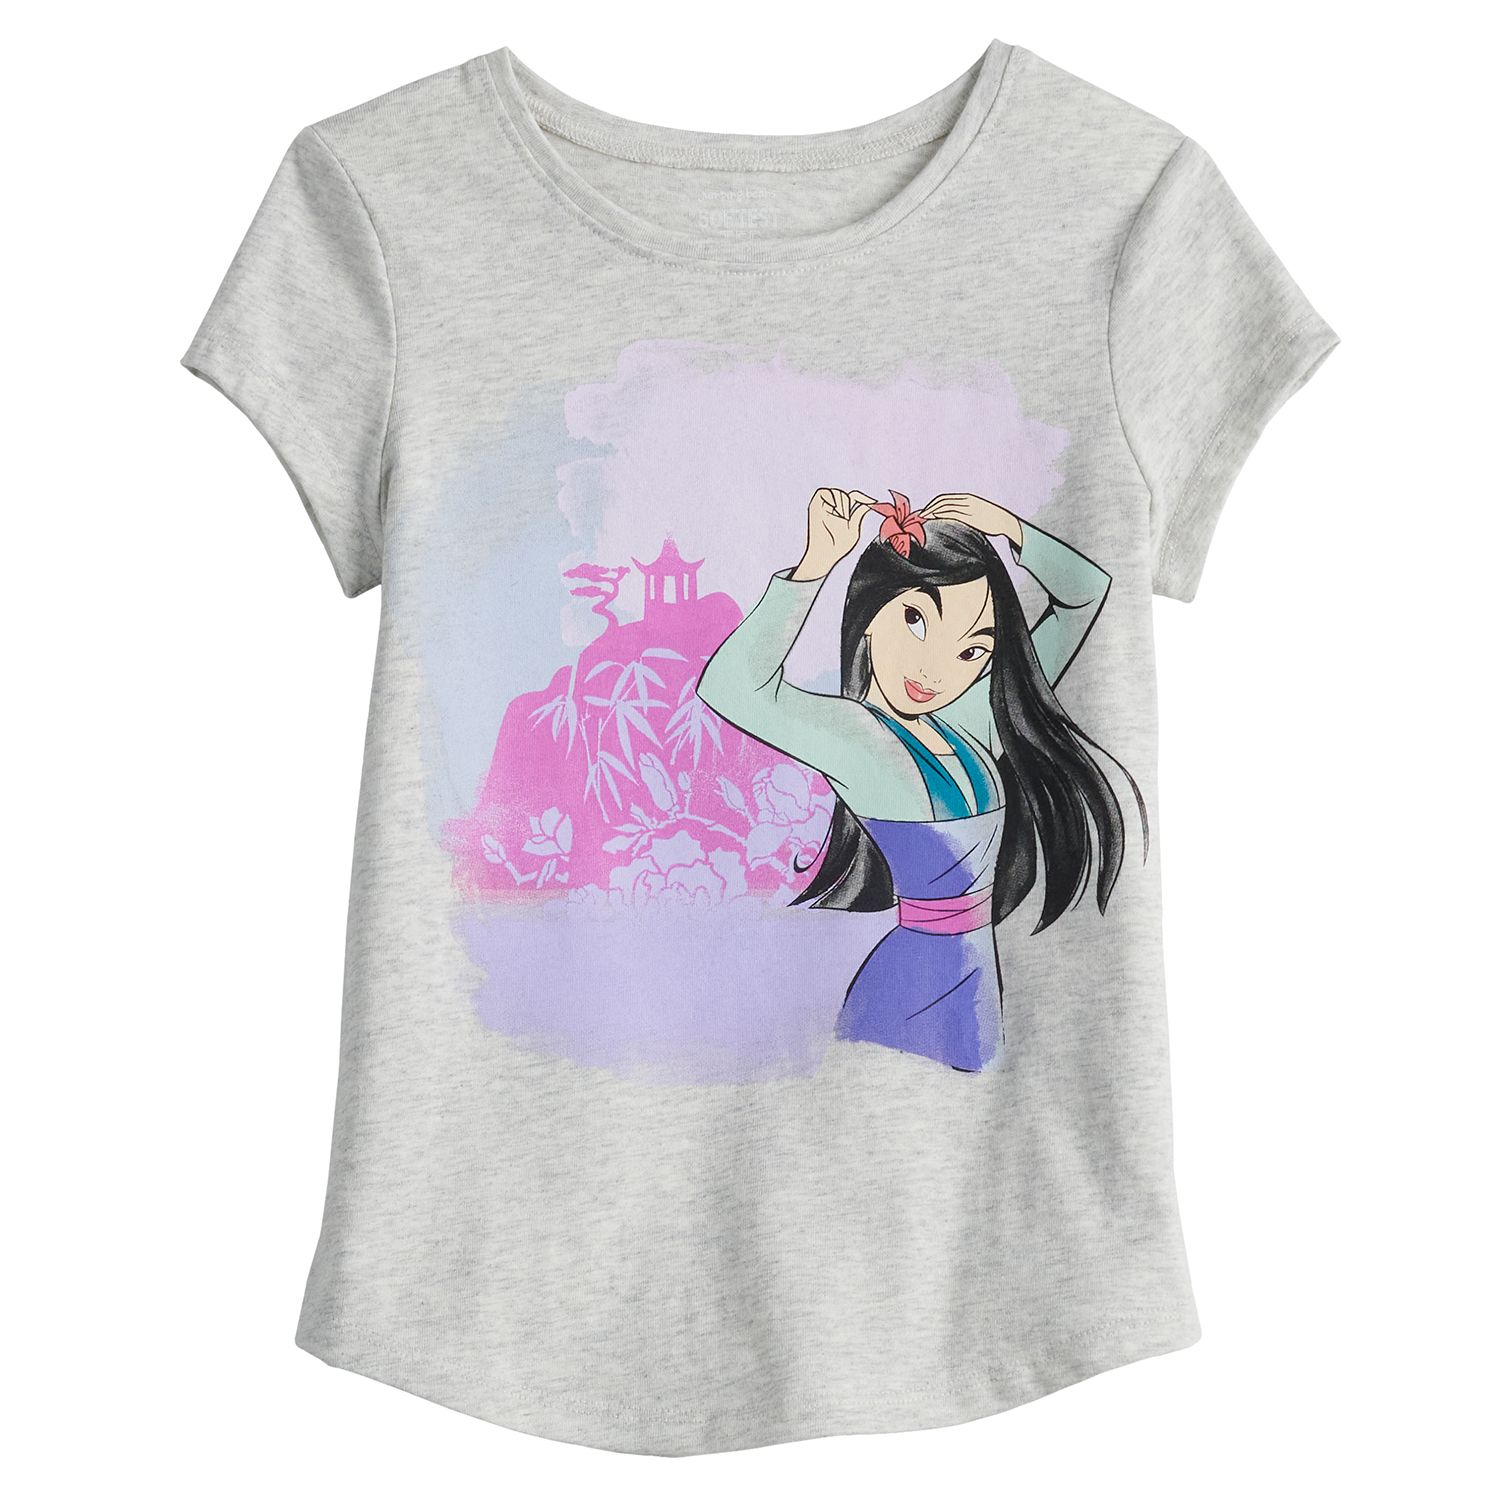 Image for Disney/Jumping Beans Disney's Mulan Toddler Girl Shirttail Tee by Jumping Beans® at Kohl's.